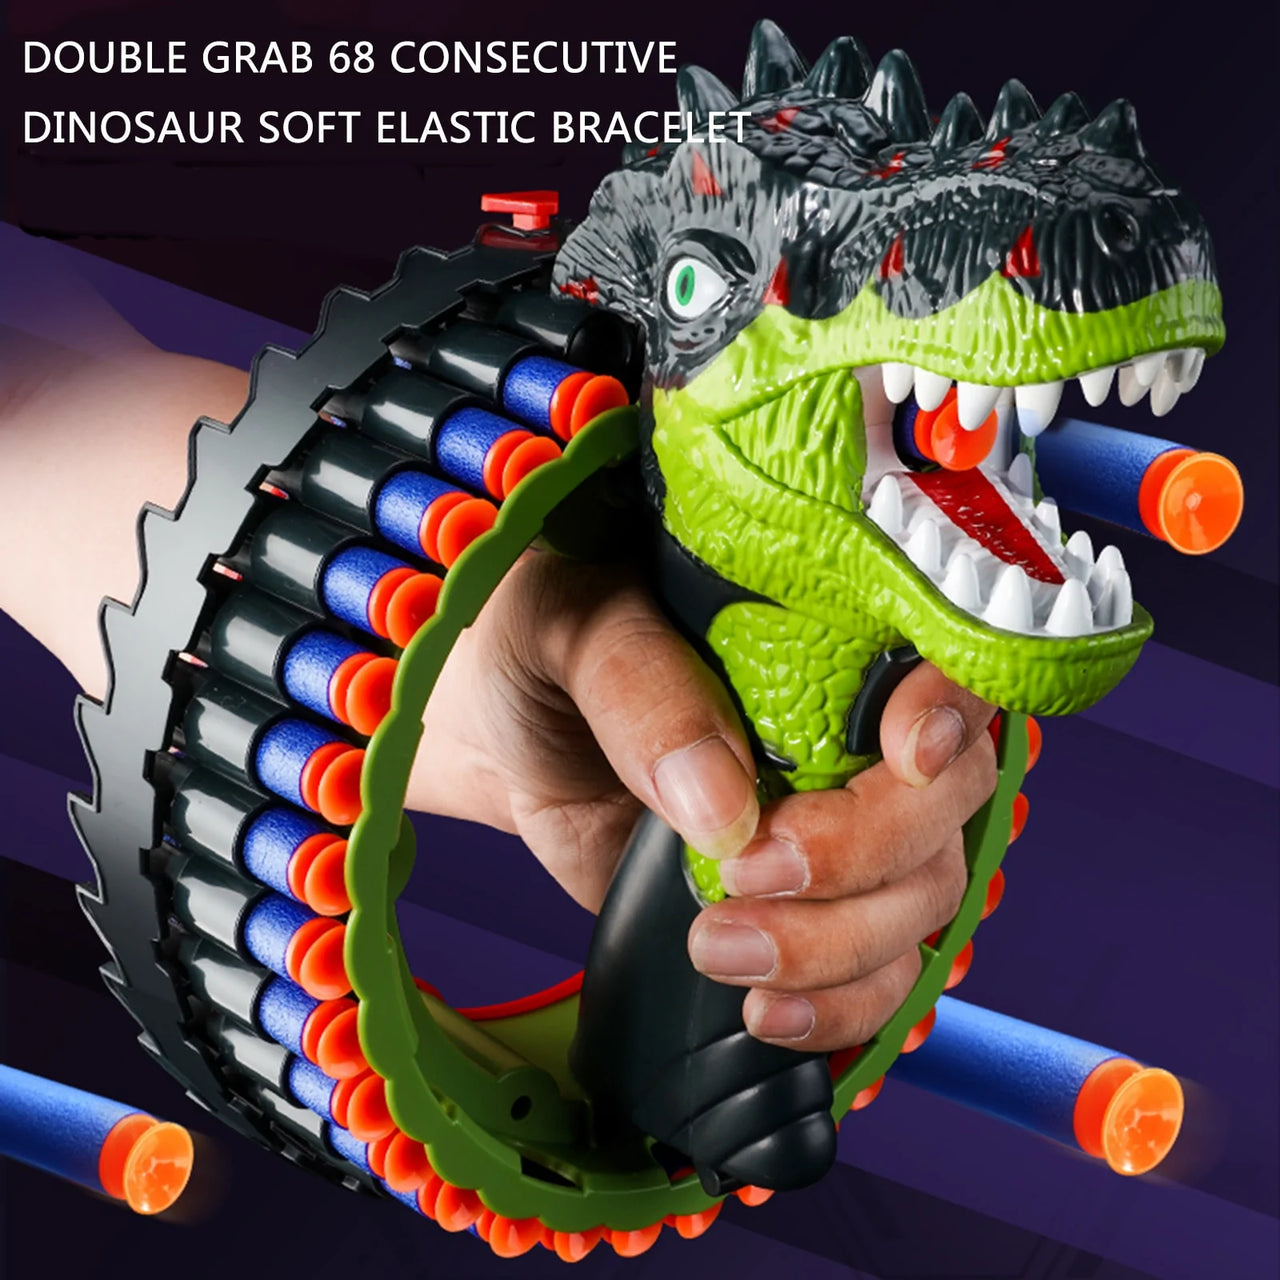 Rapid Fire Dino Bracelet Gun